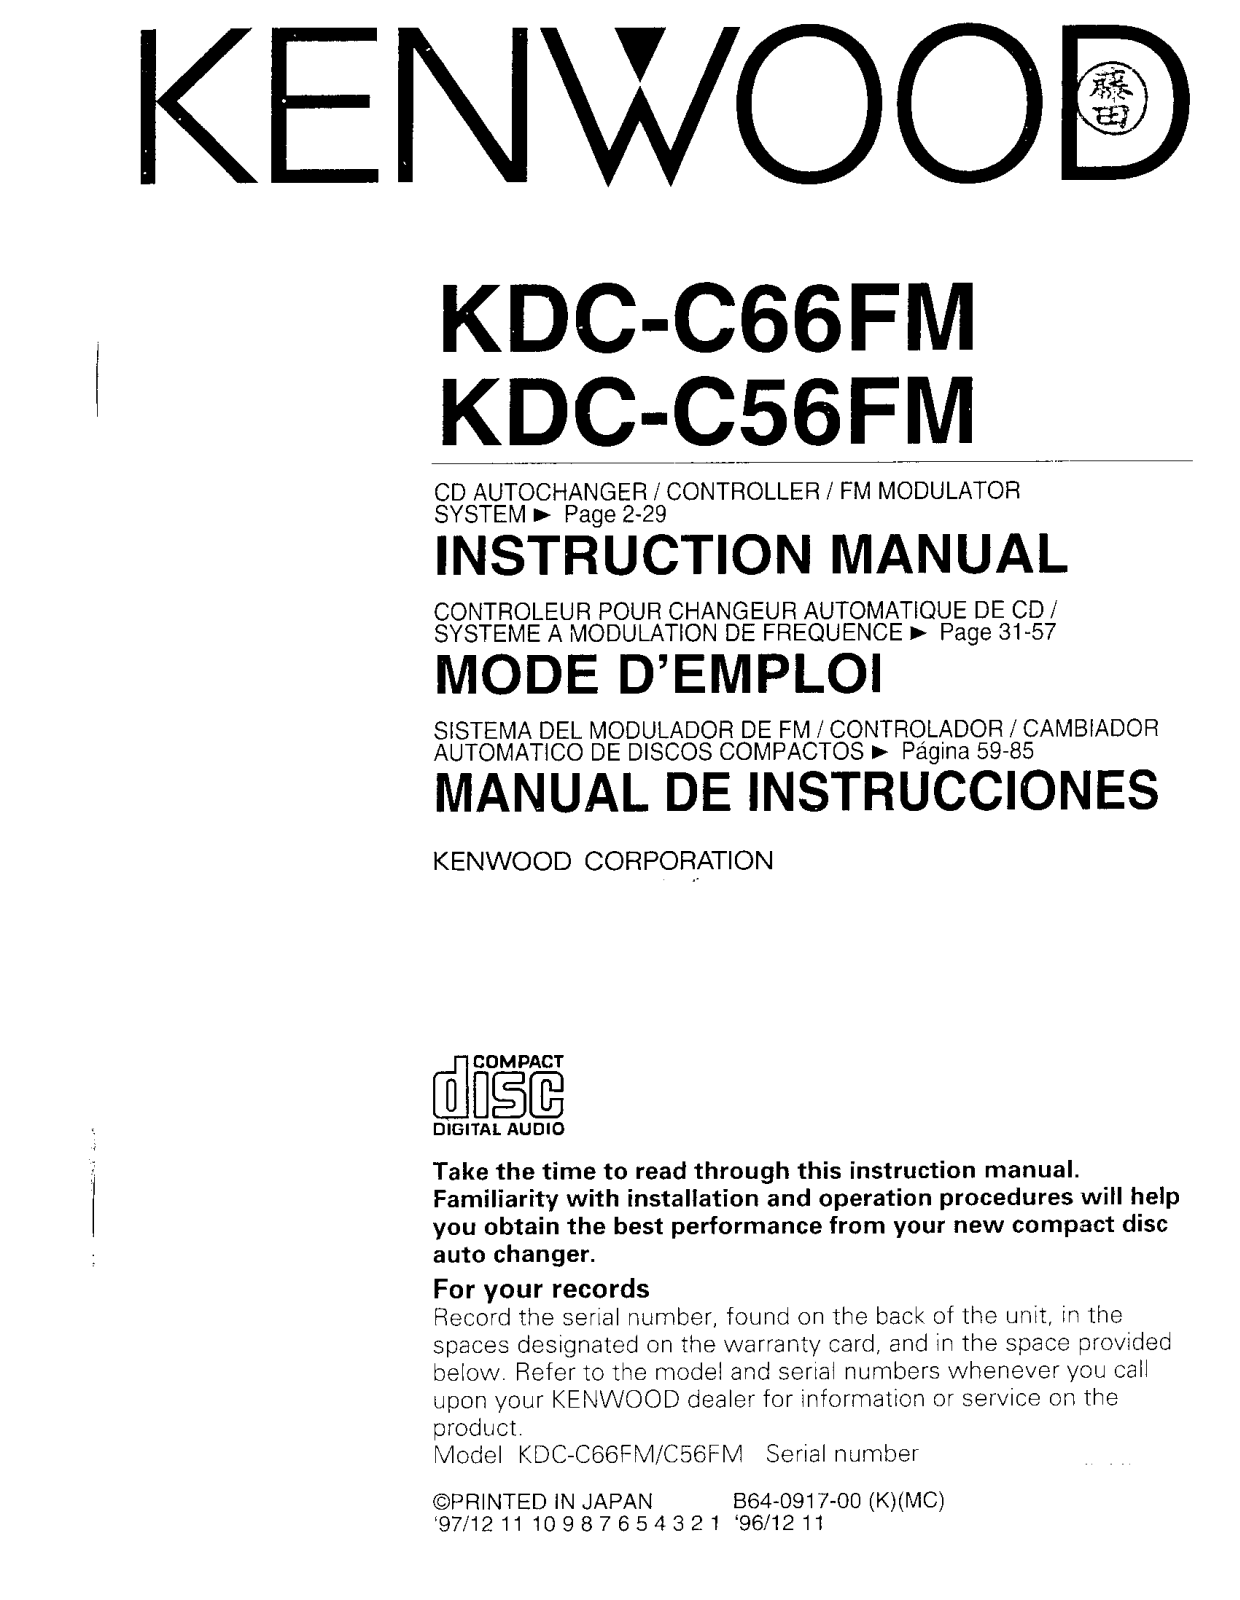 Kenwood KDC-C66FM, KDC-C56FM Owner's Manual